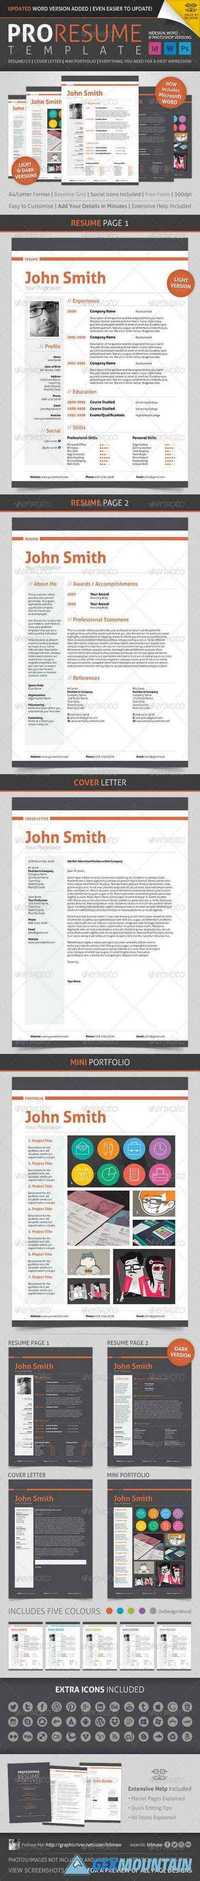 Graphicriver - Professional Resume/CV 1820628